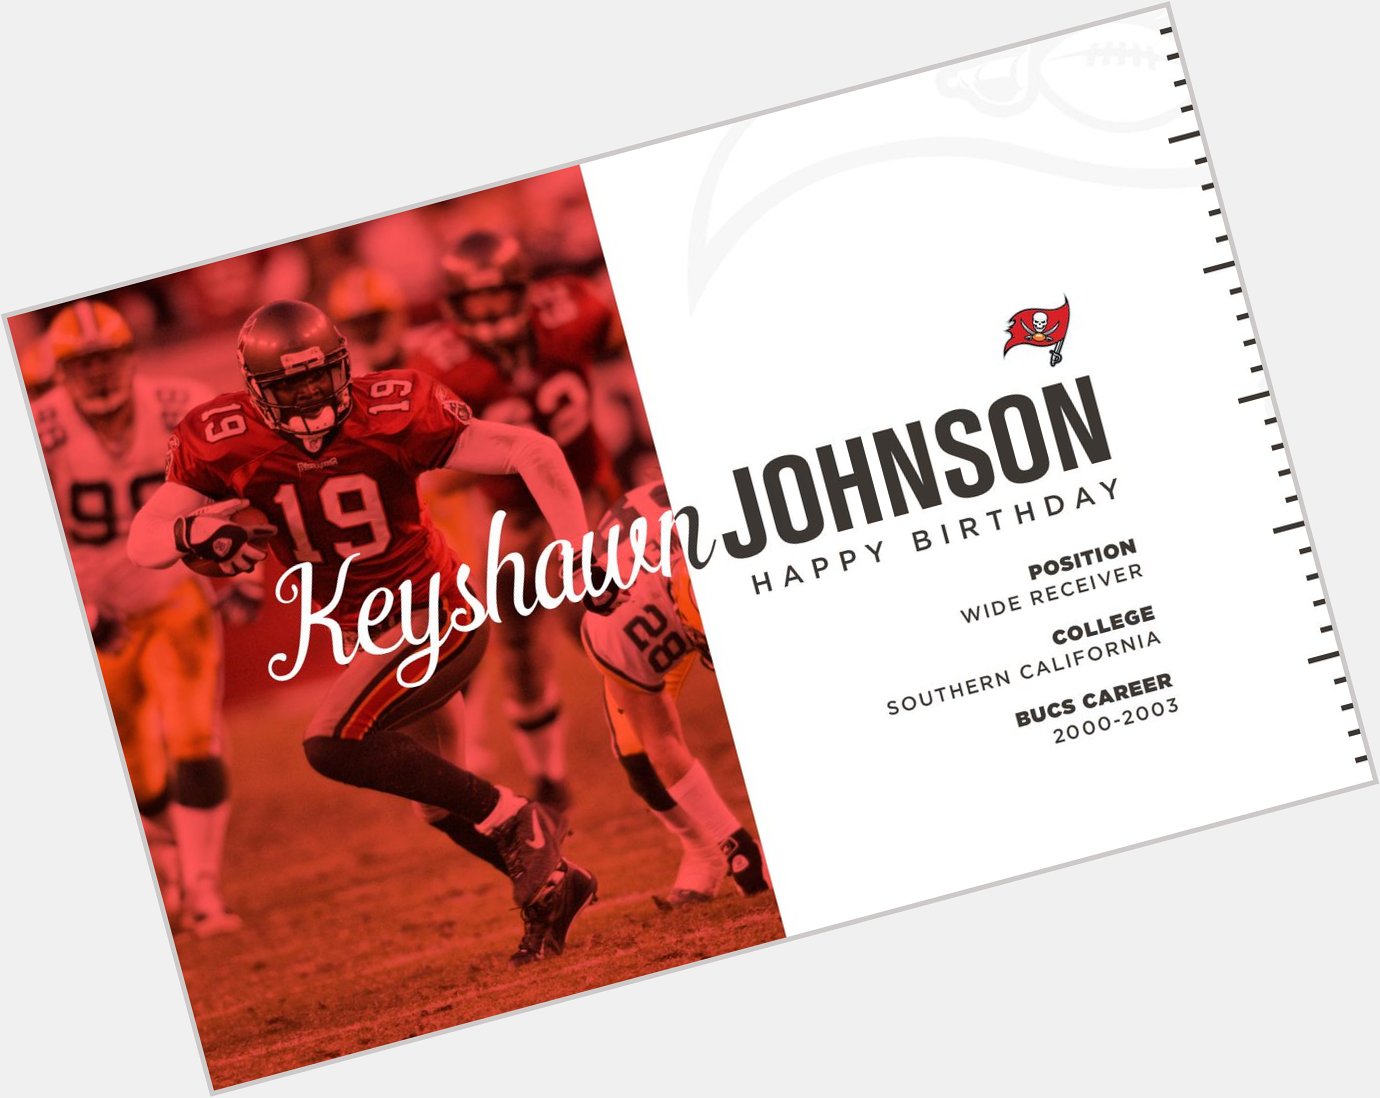  Help us wish a happy birthday to Super Bowl champion, Keyshawn Johnson! 